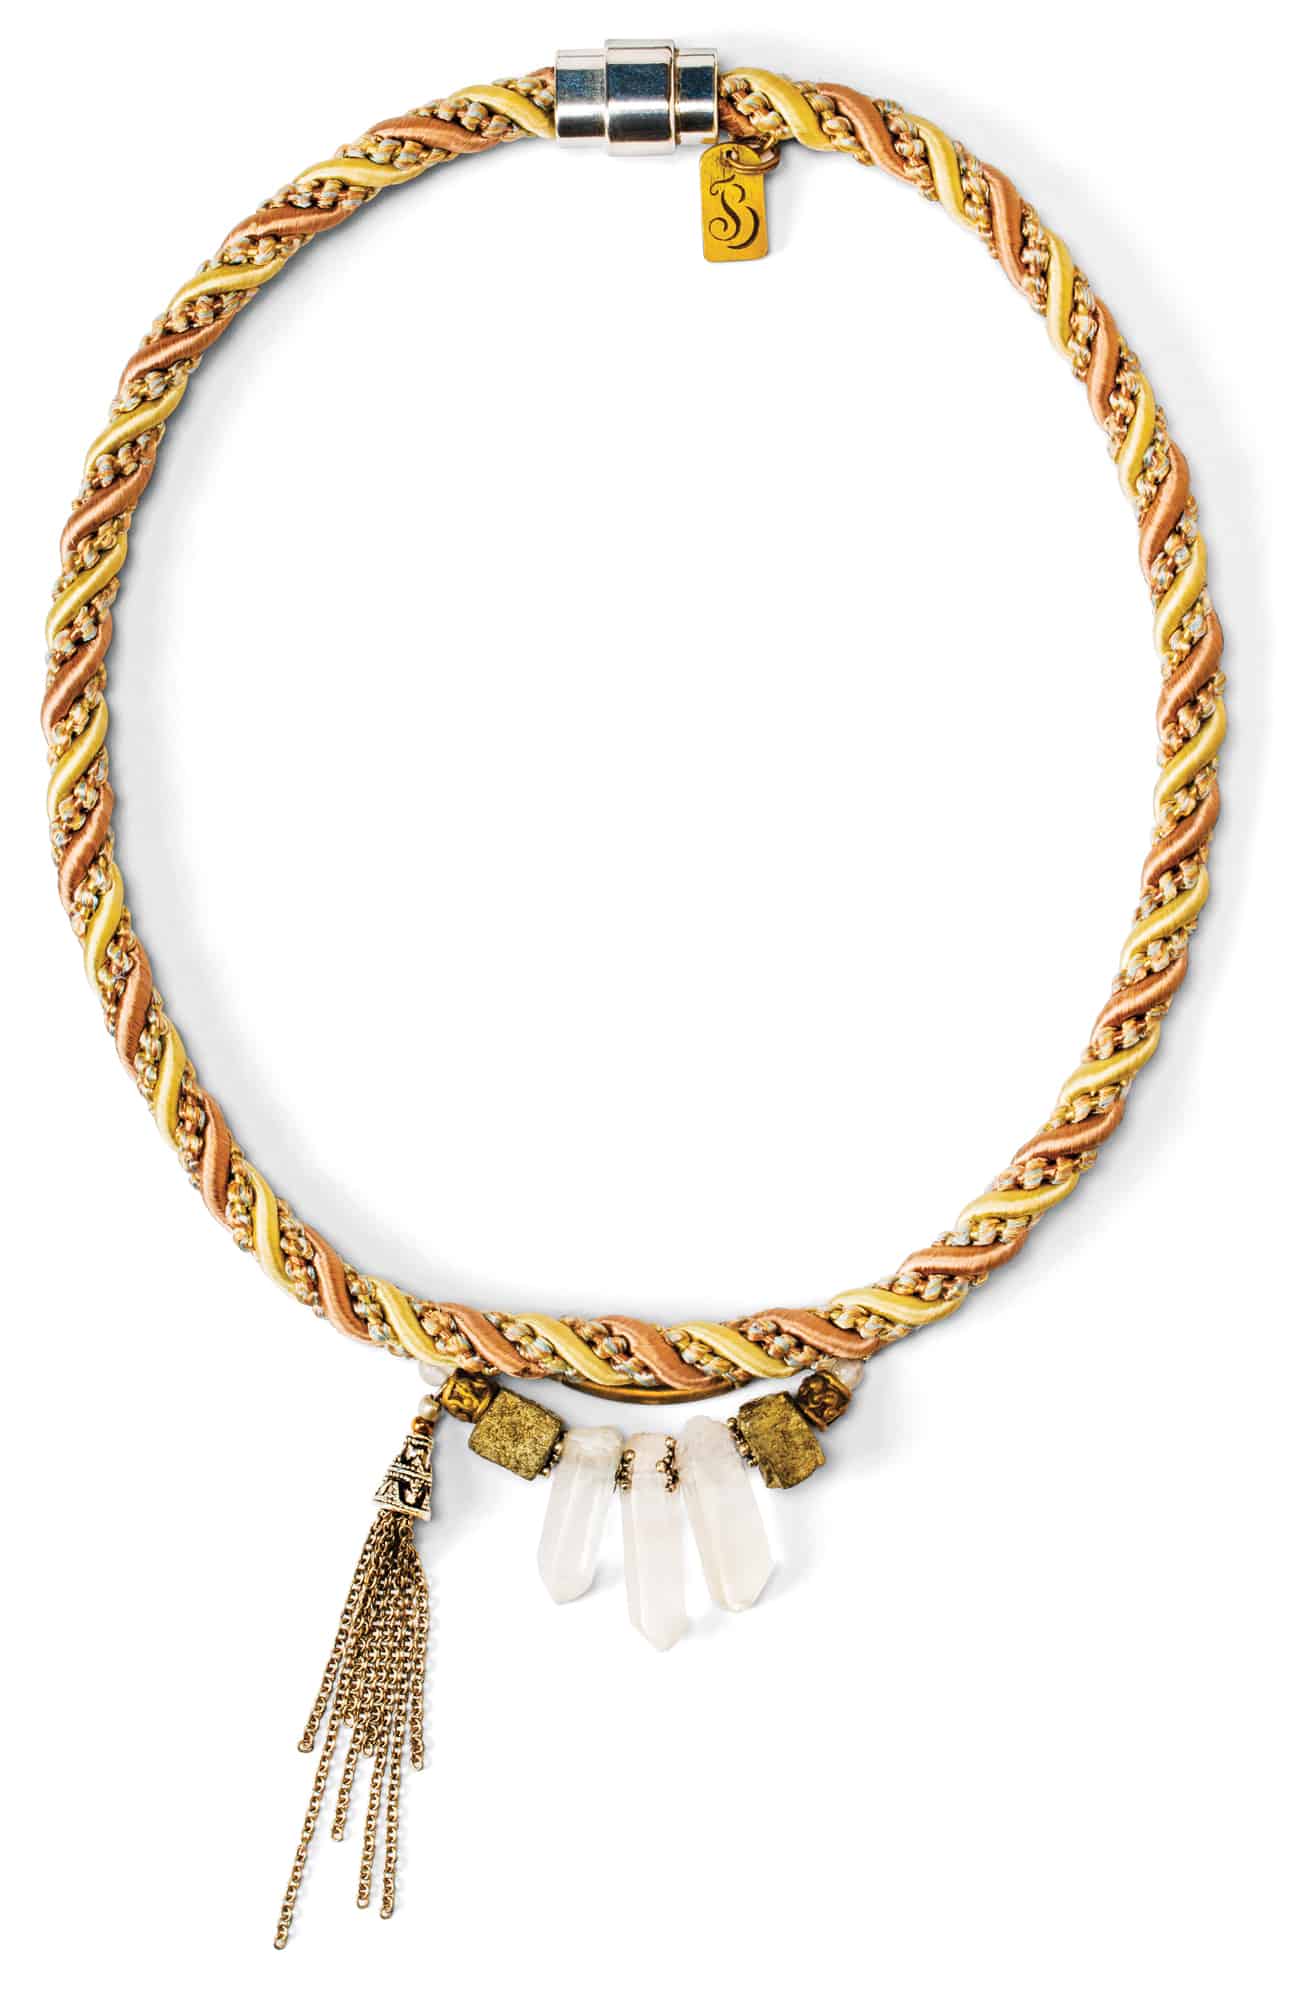 Necklace $125 by Julie_Bessette